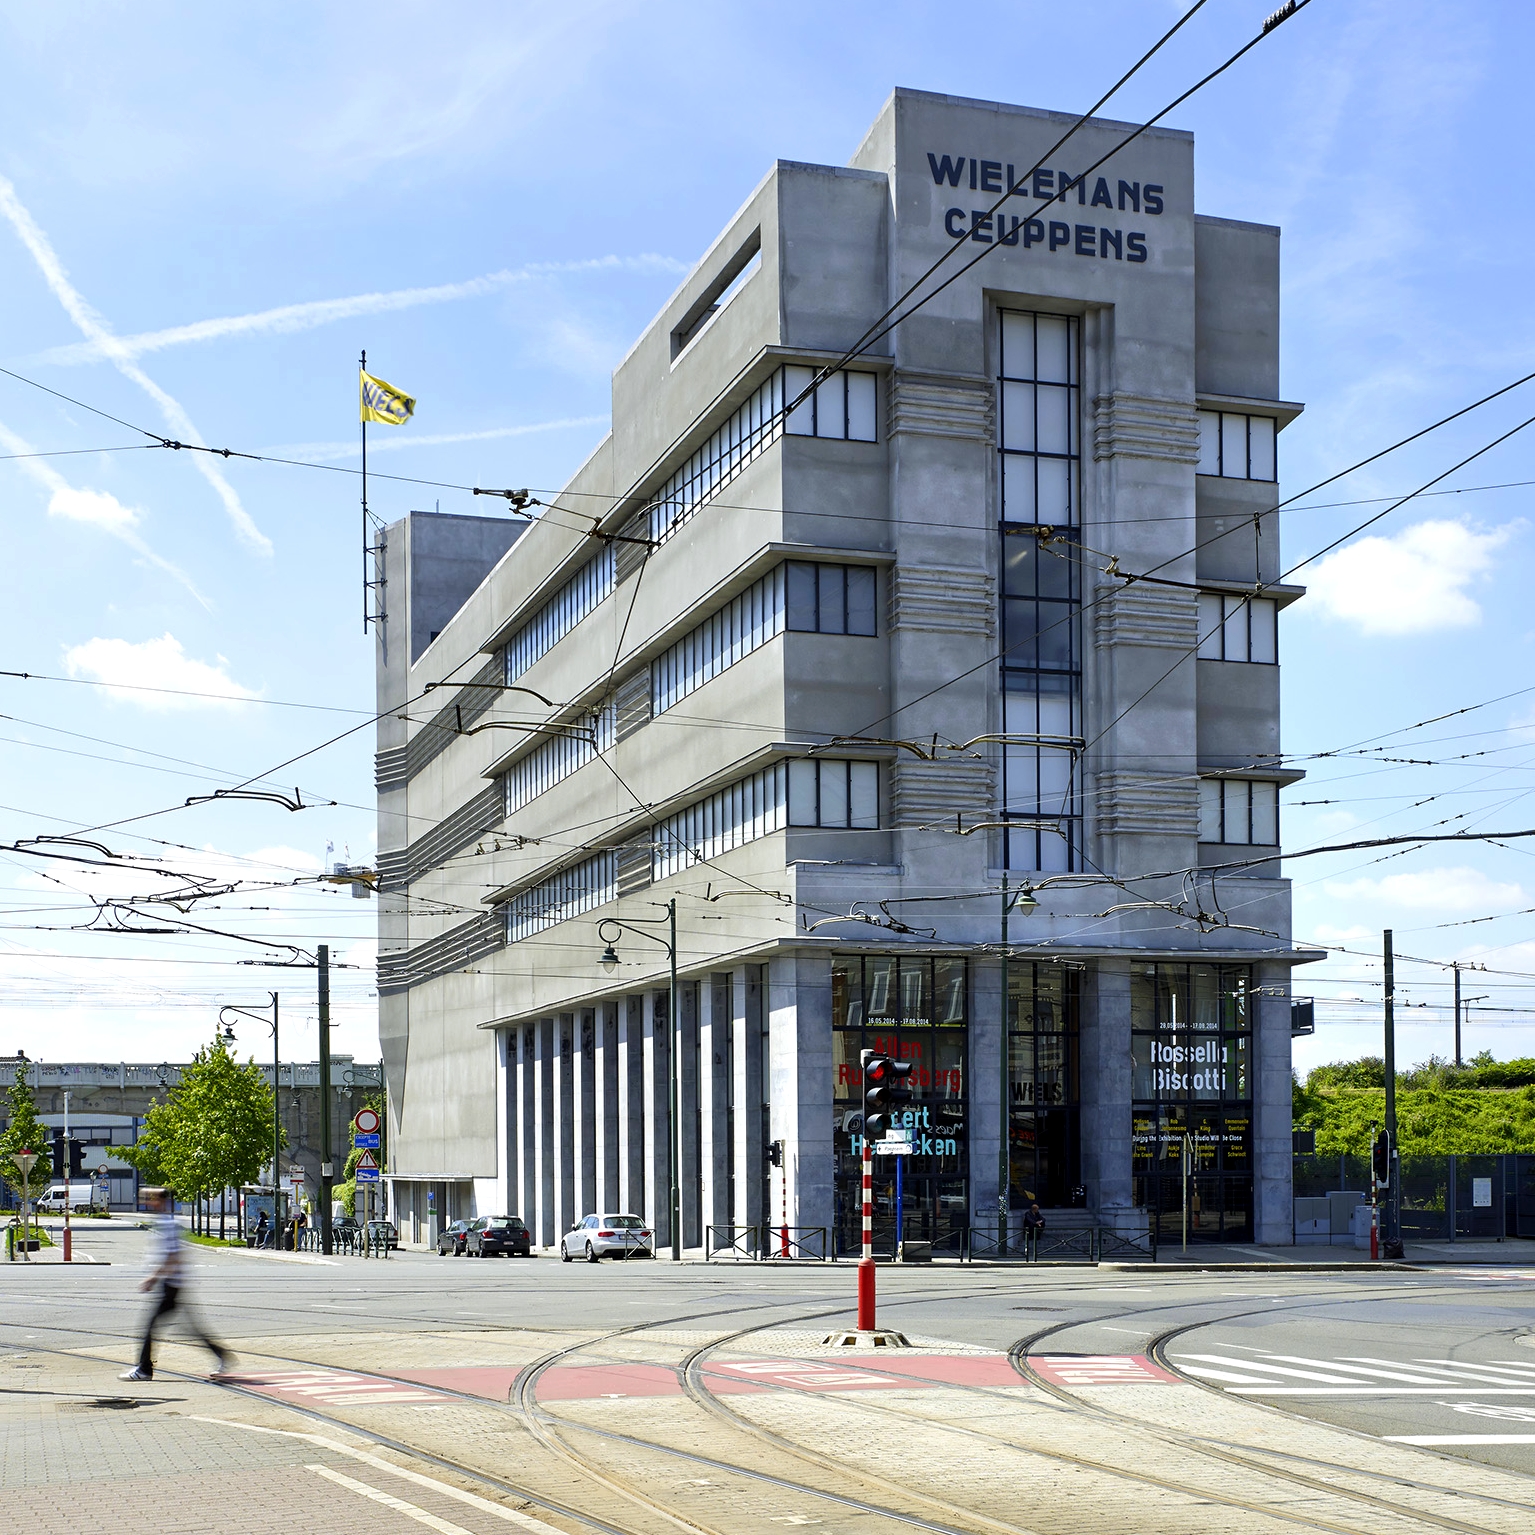 Wiels - Contemporary art centre